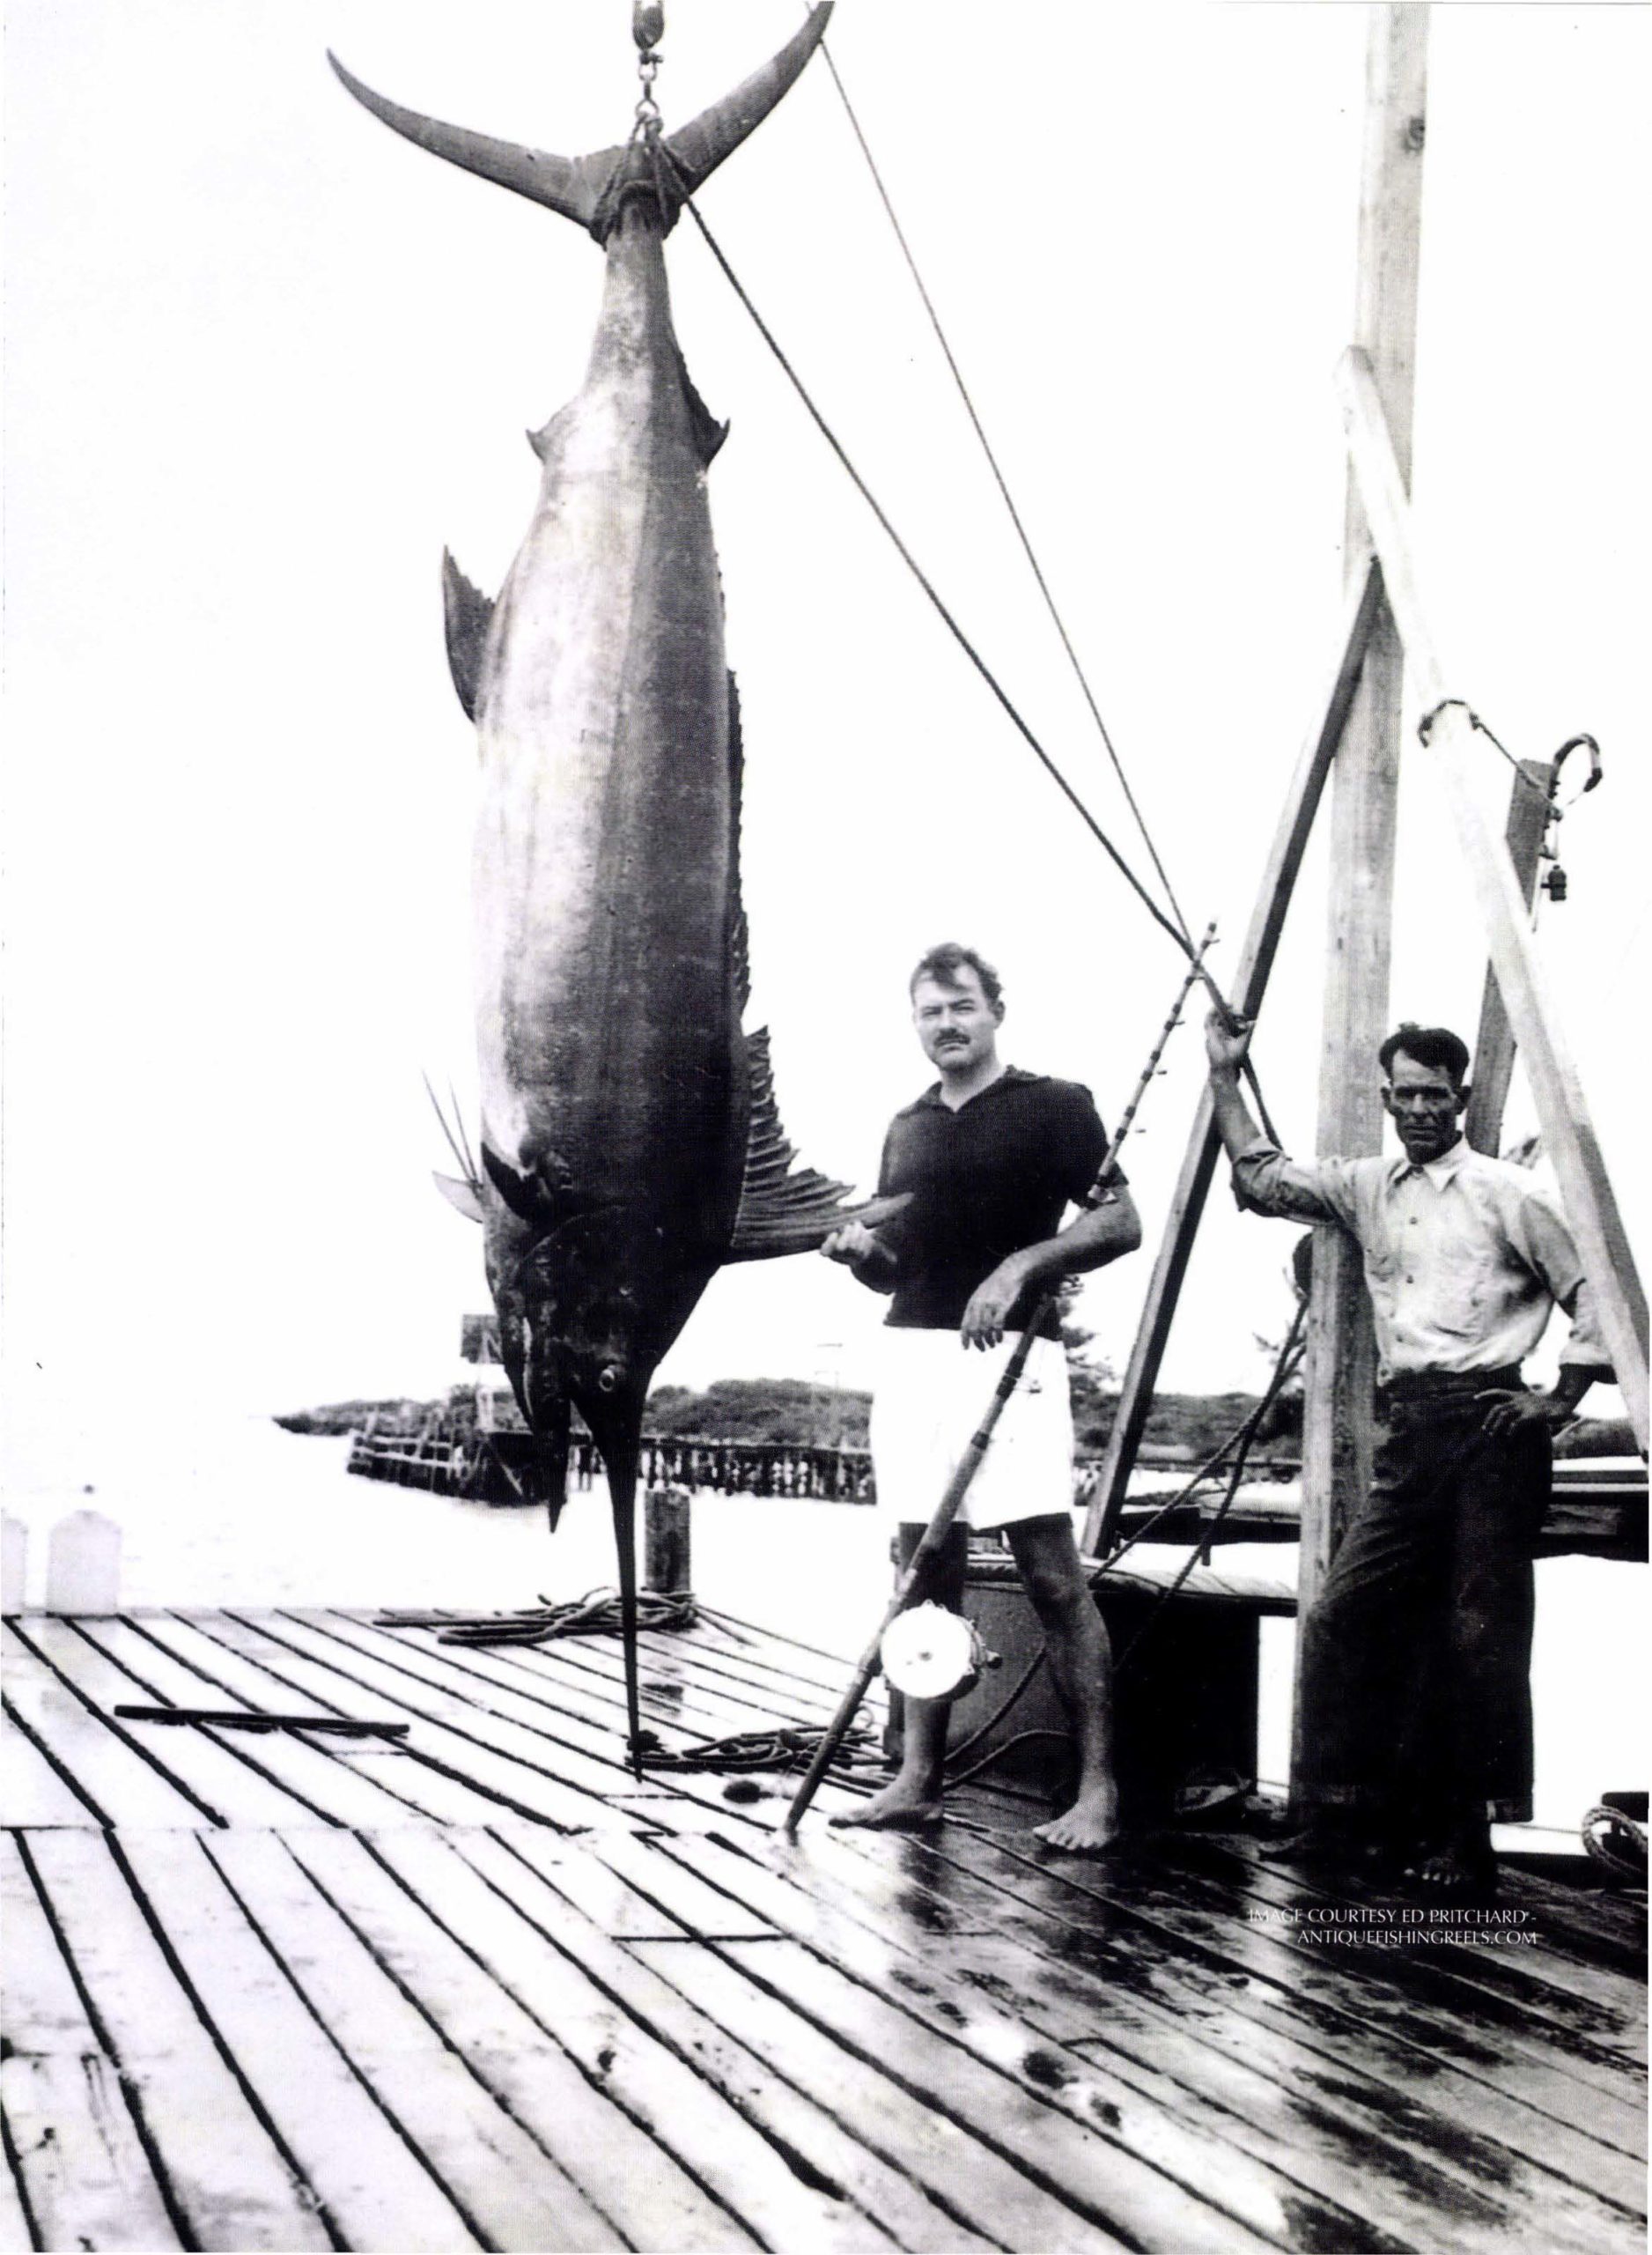 Hemingway swordfish